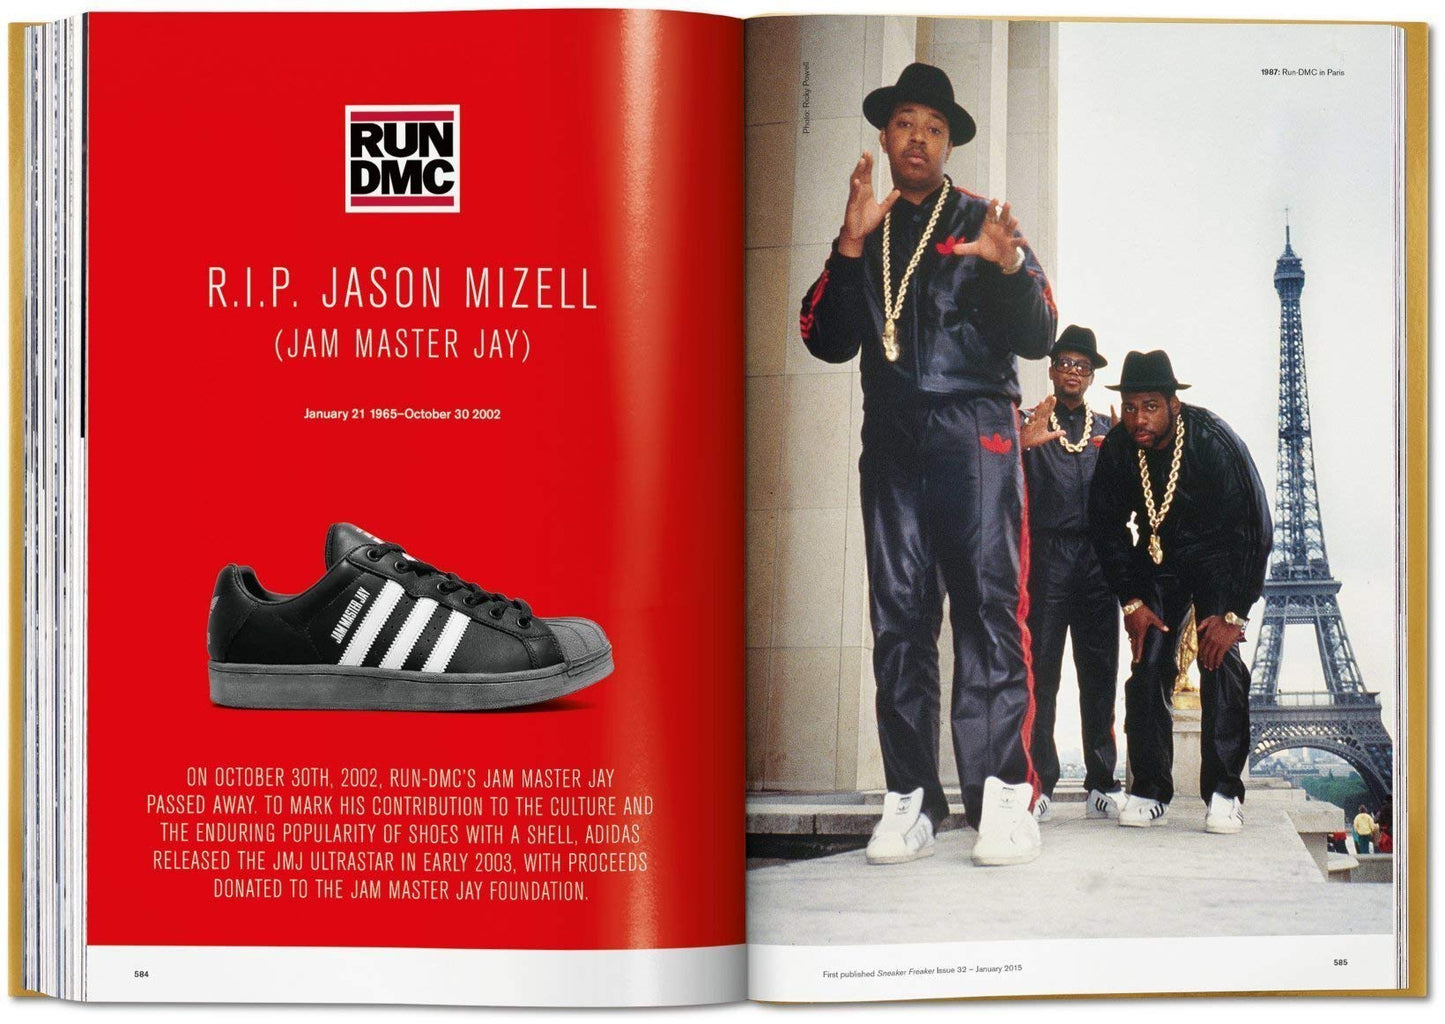 Taschen The Ultimate Sneaker Book